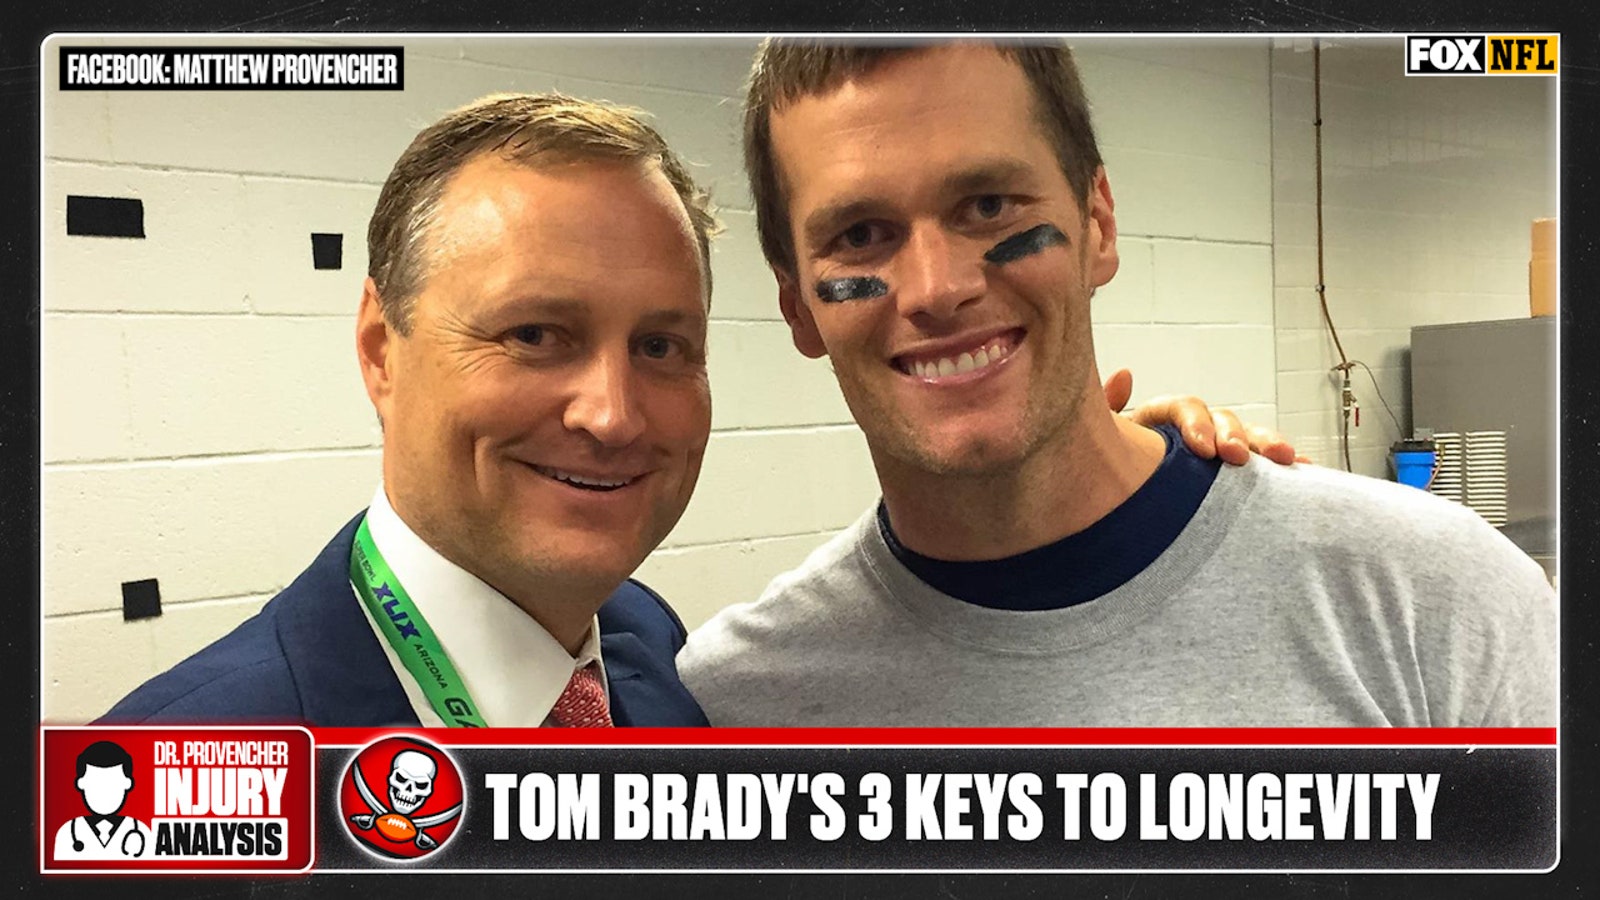 Tom Brady can be an NFL QB at, beyond 45 years old -- Dr. Matt Provencher